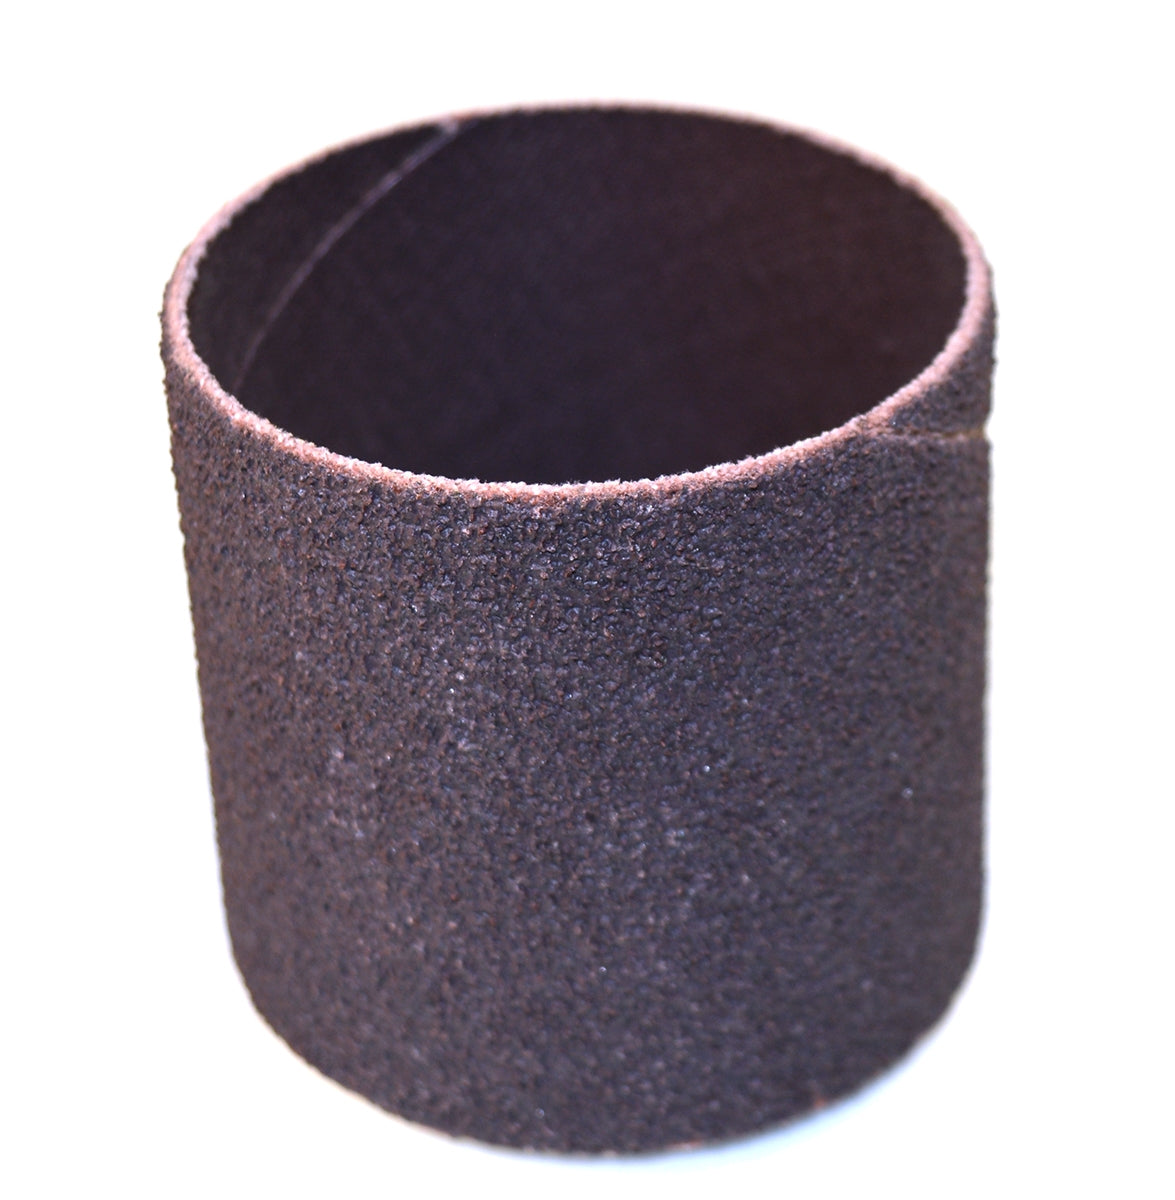 Abrasive sanding sleeve, 2" x 2", 80 Grit